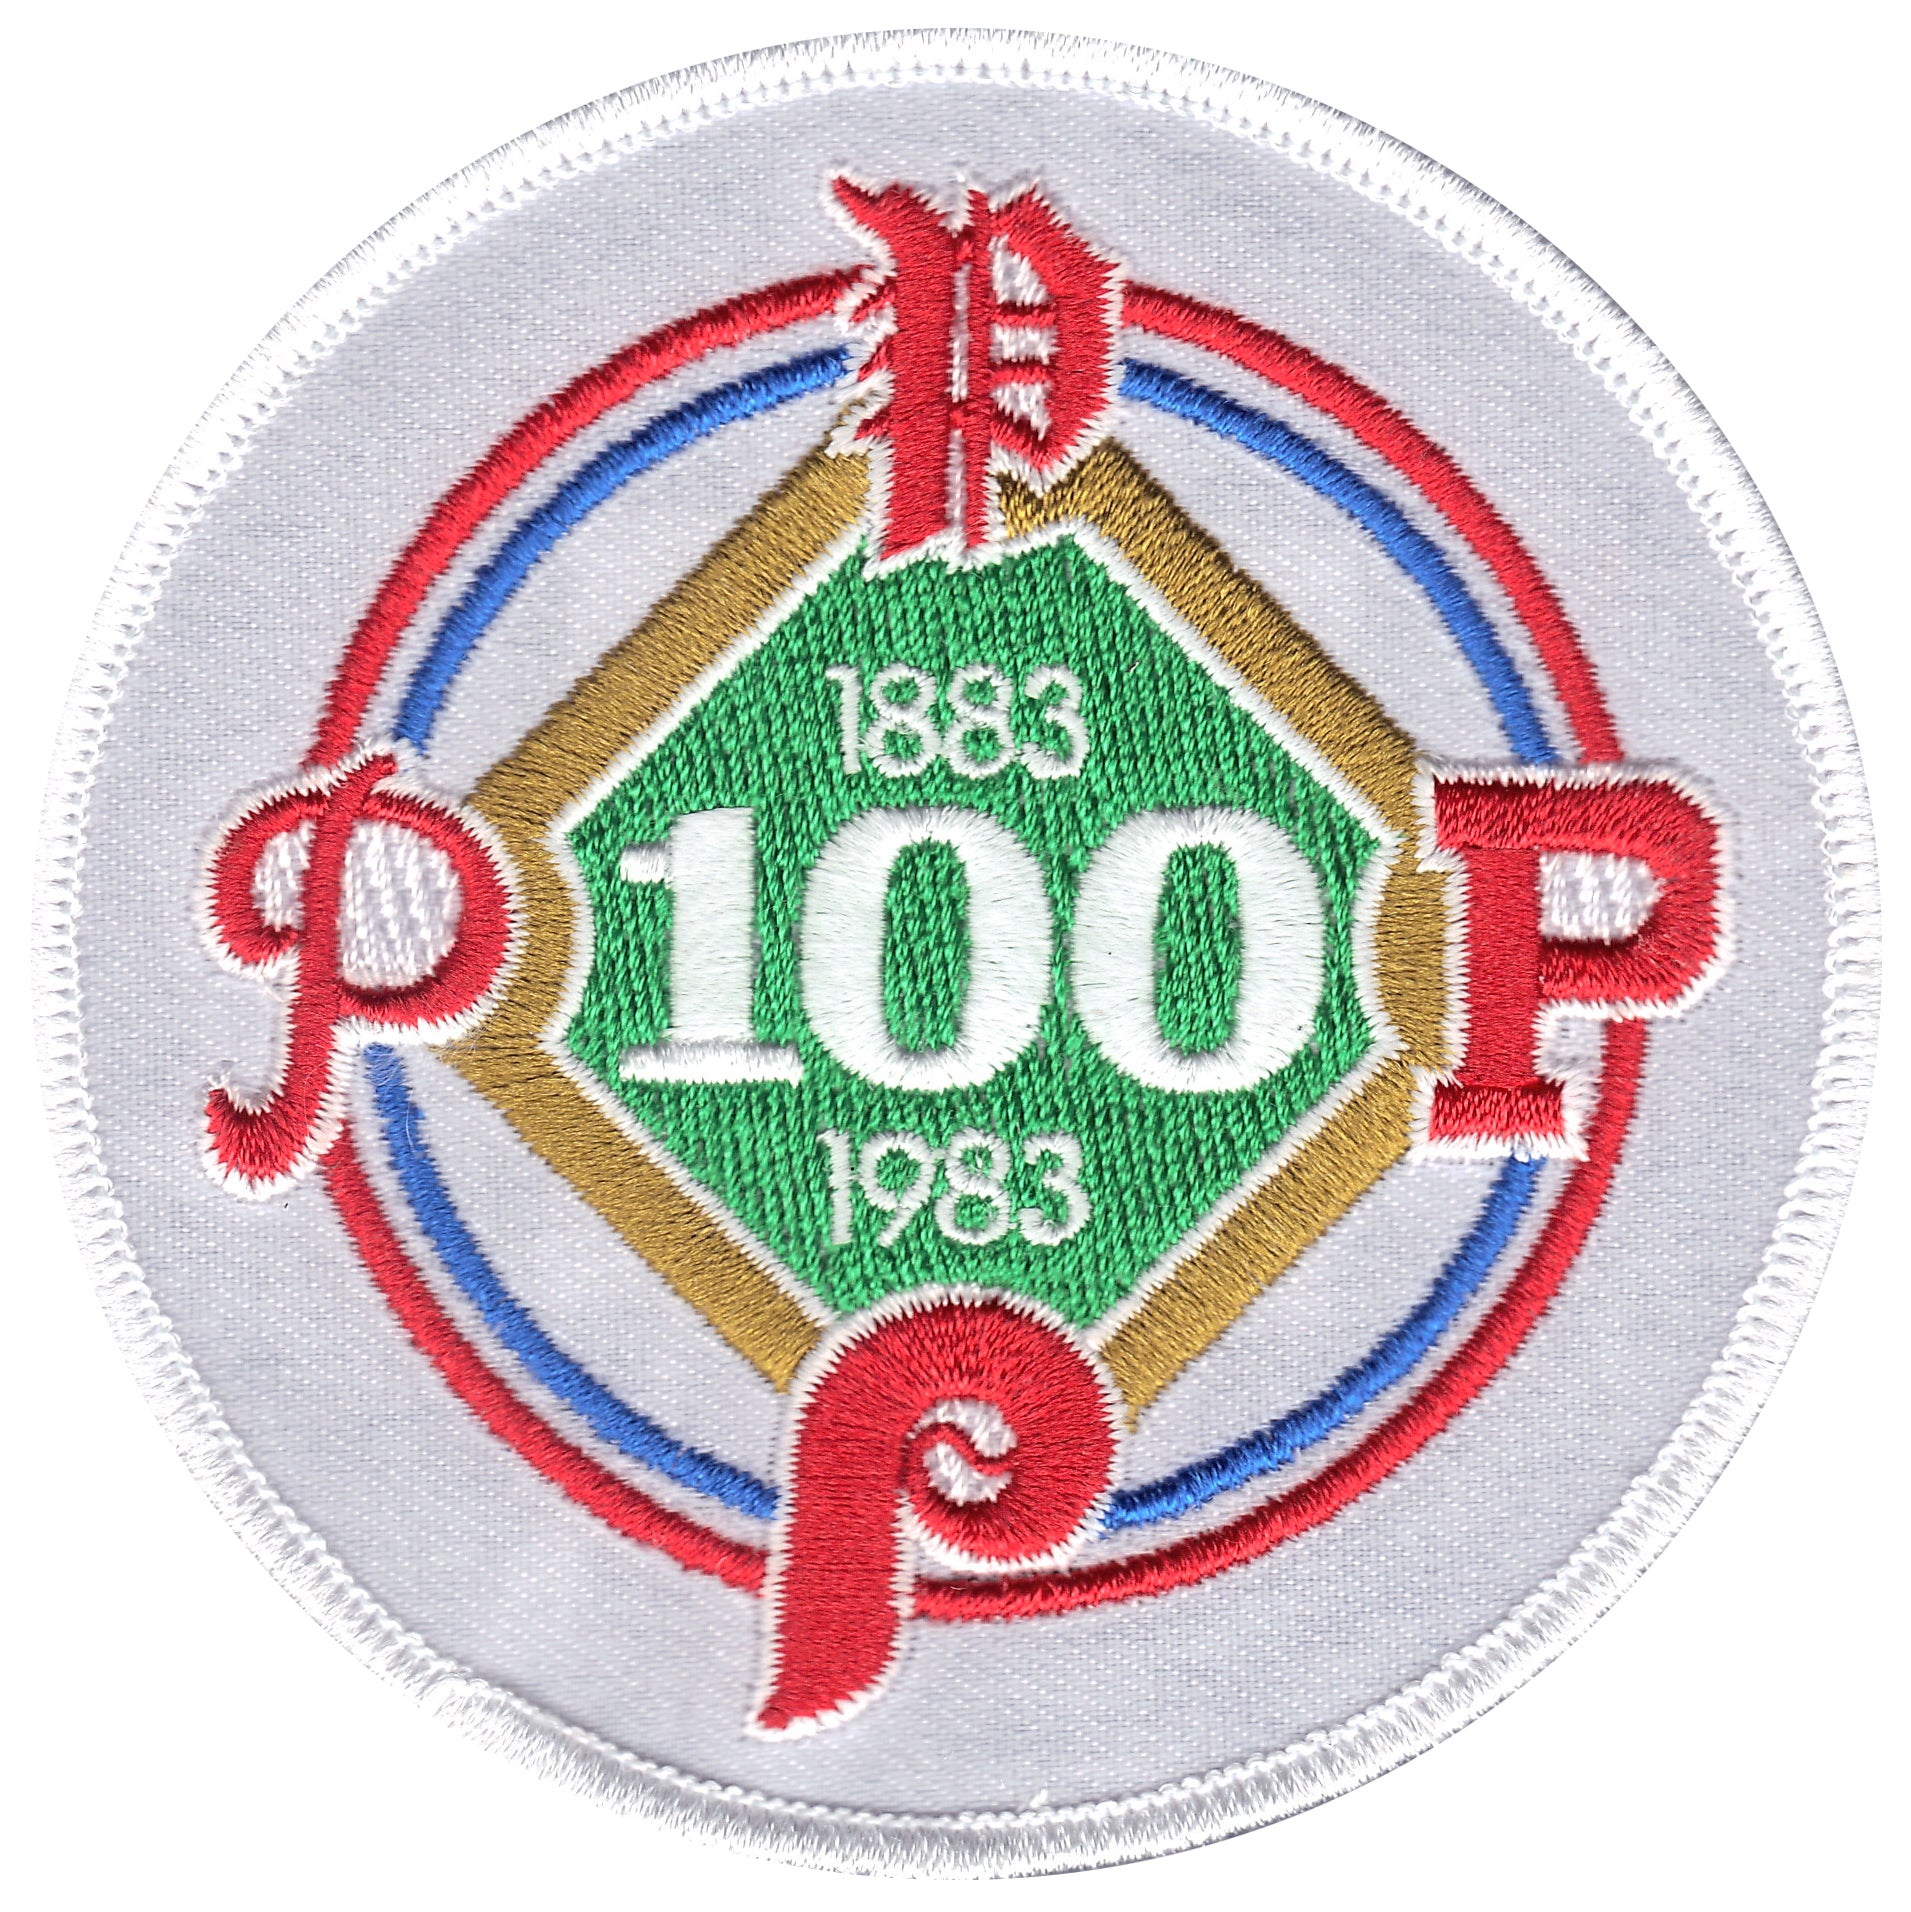 1983 Philadelphia Phillies 100th Anniversary Patch 